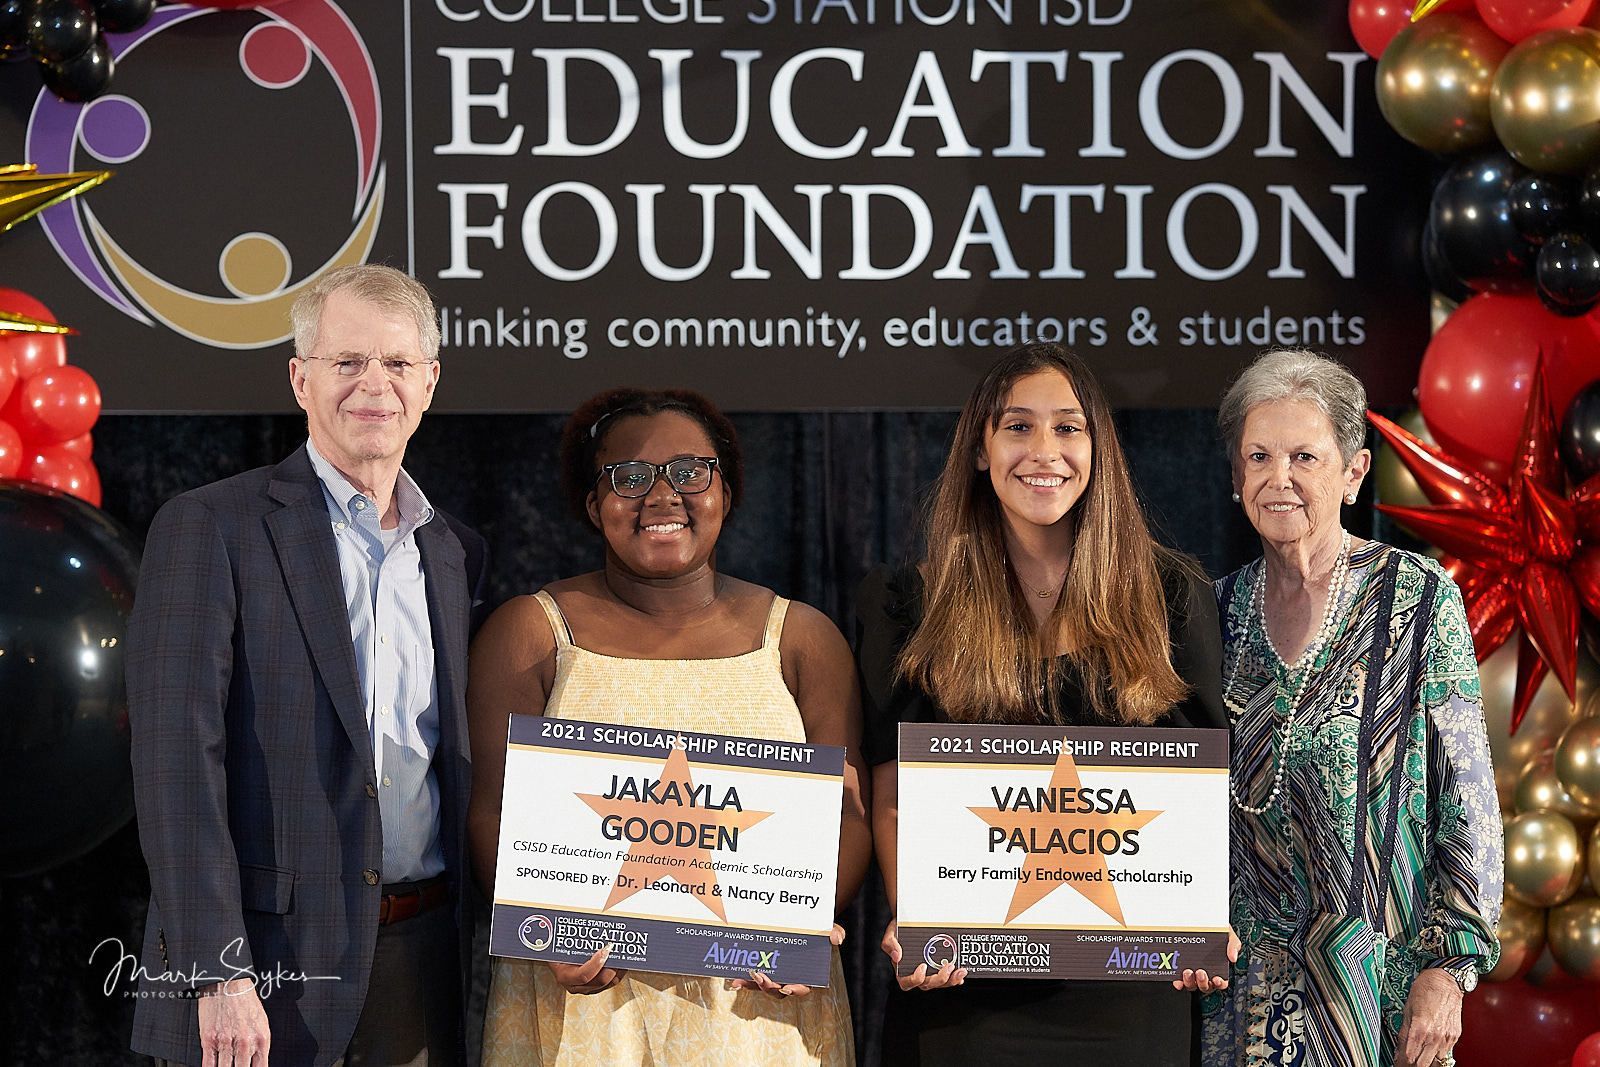 CSISD Education Foundation Awards Record-Breaking $130,200 in Scholarships to Graduating Seniors